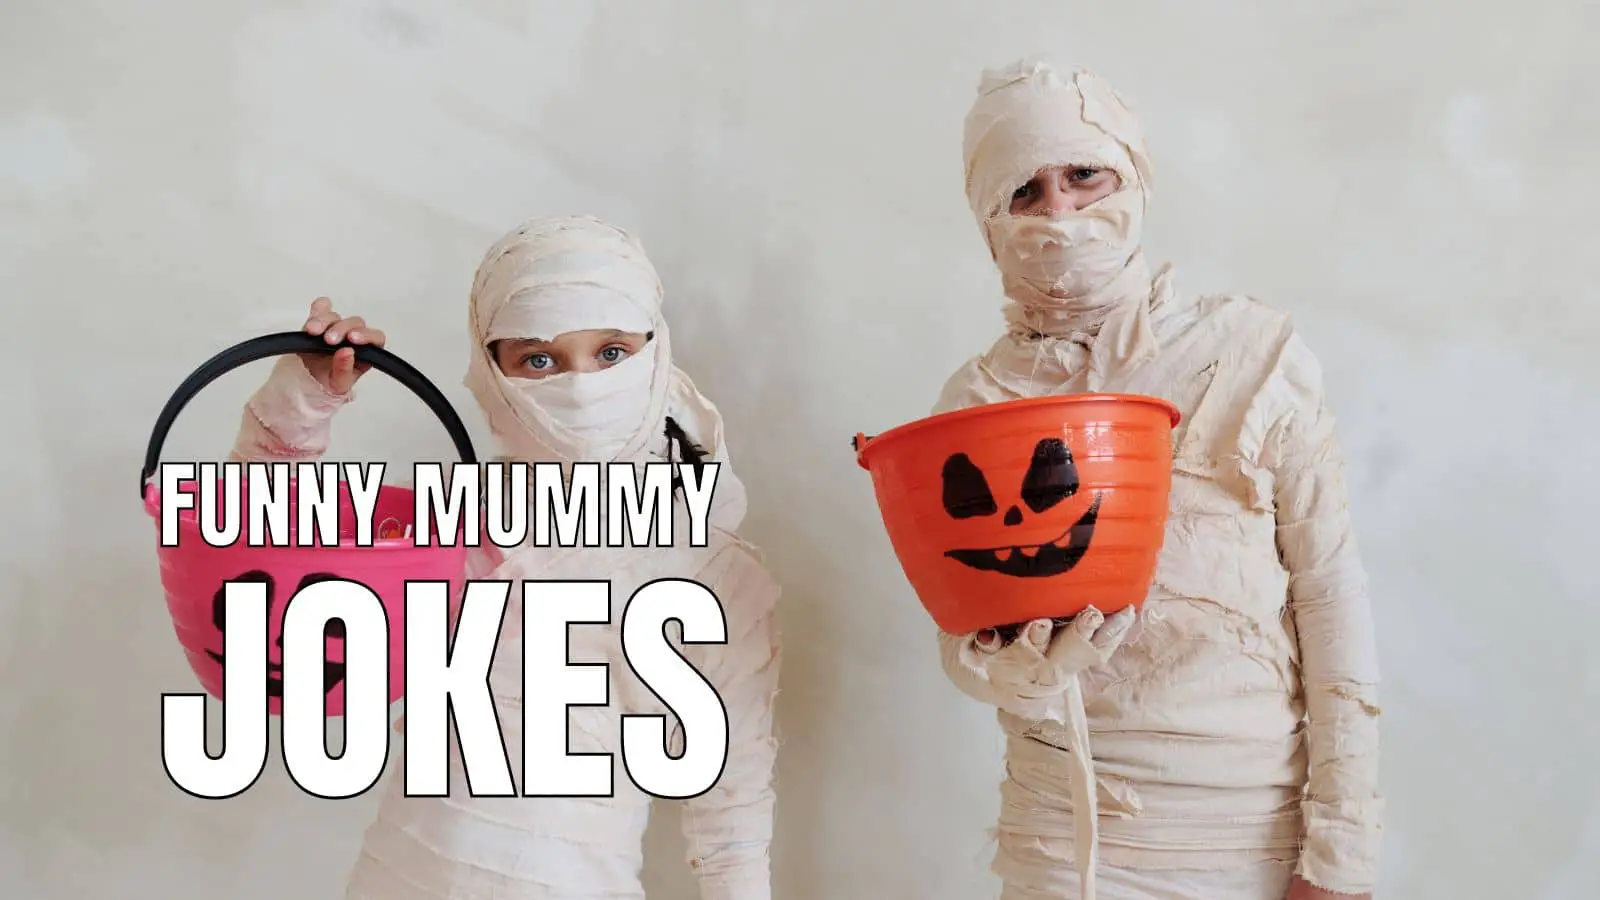 Funny Mummy Jokes for Halloween